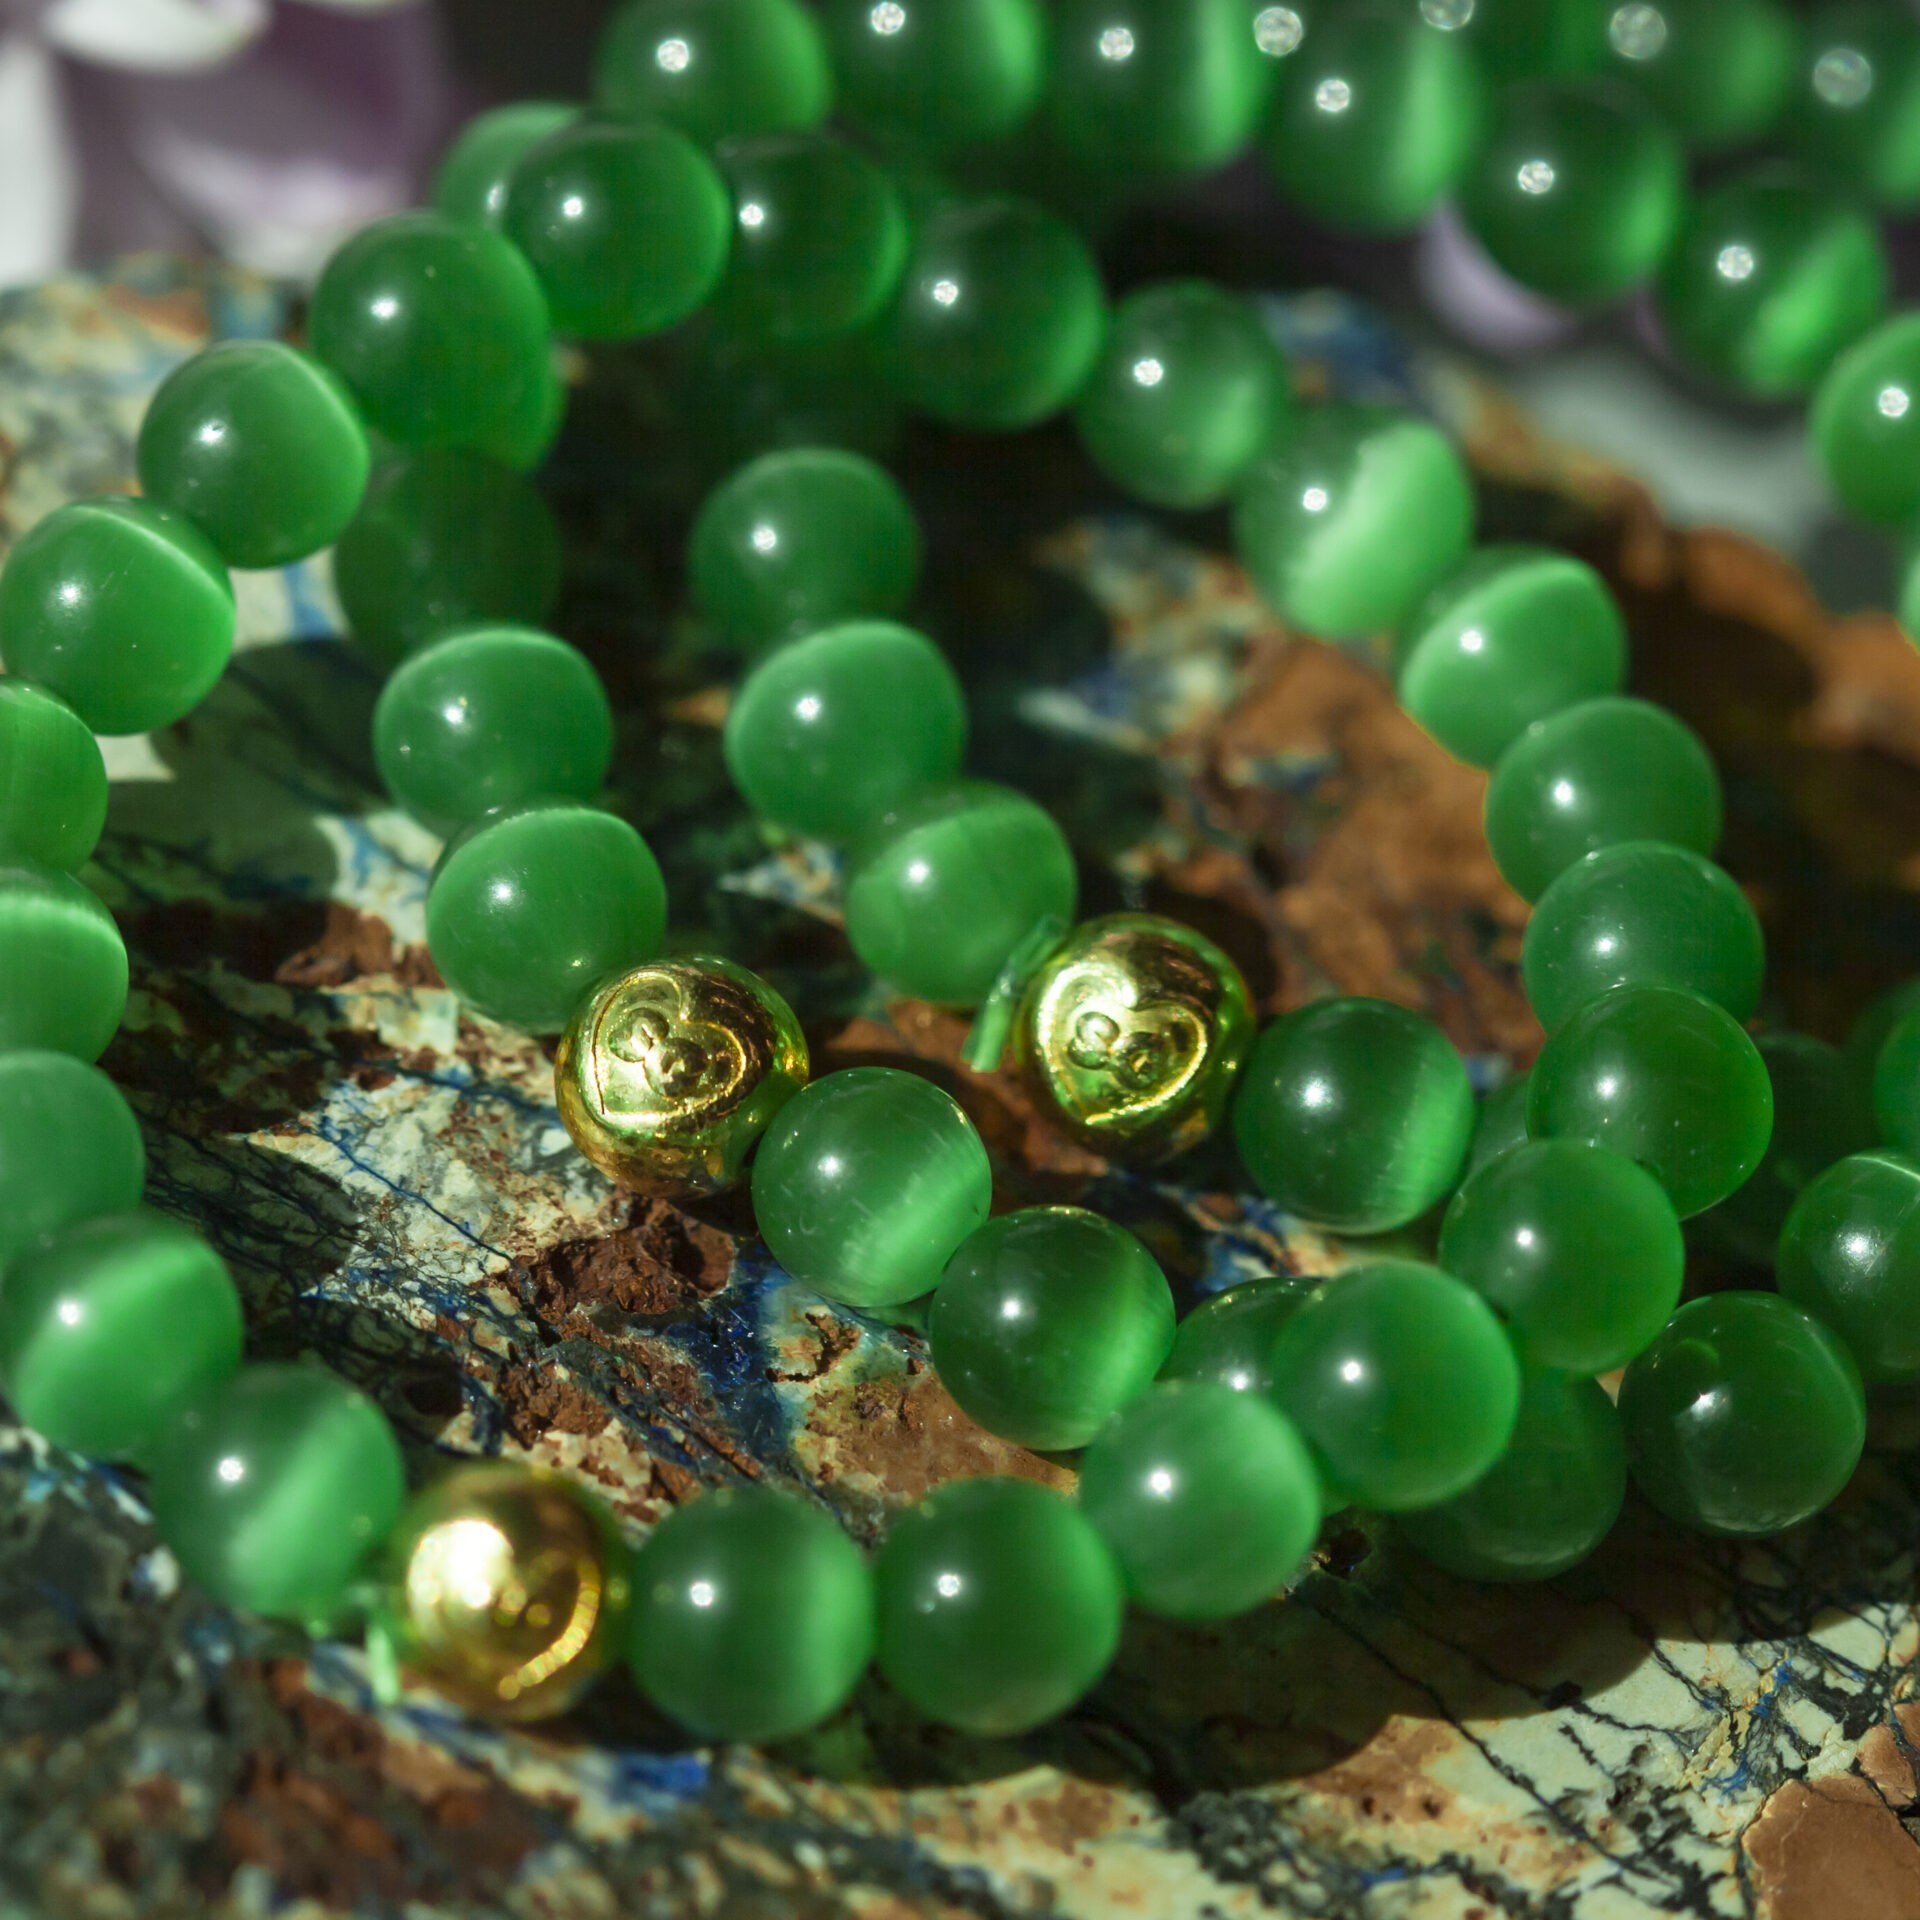 Multicolor Heart Bead Bracelet Set Green